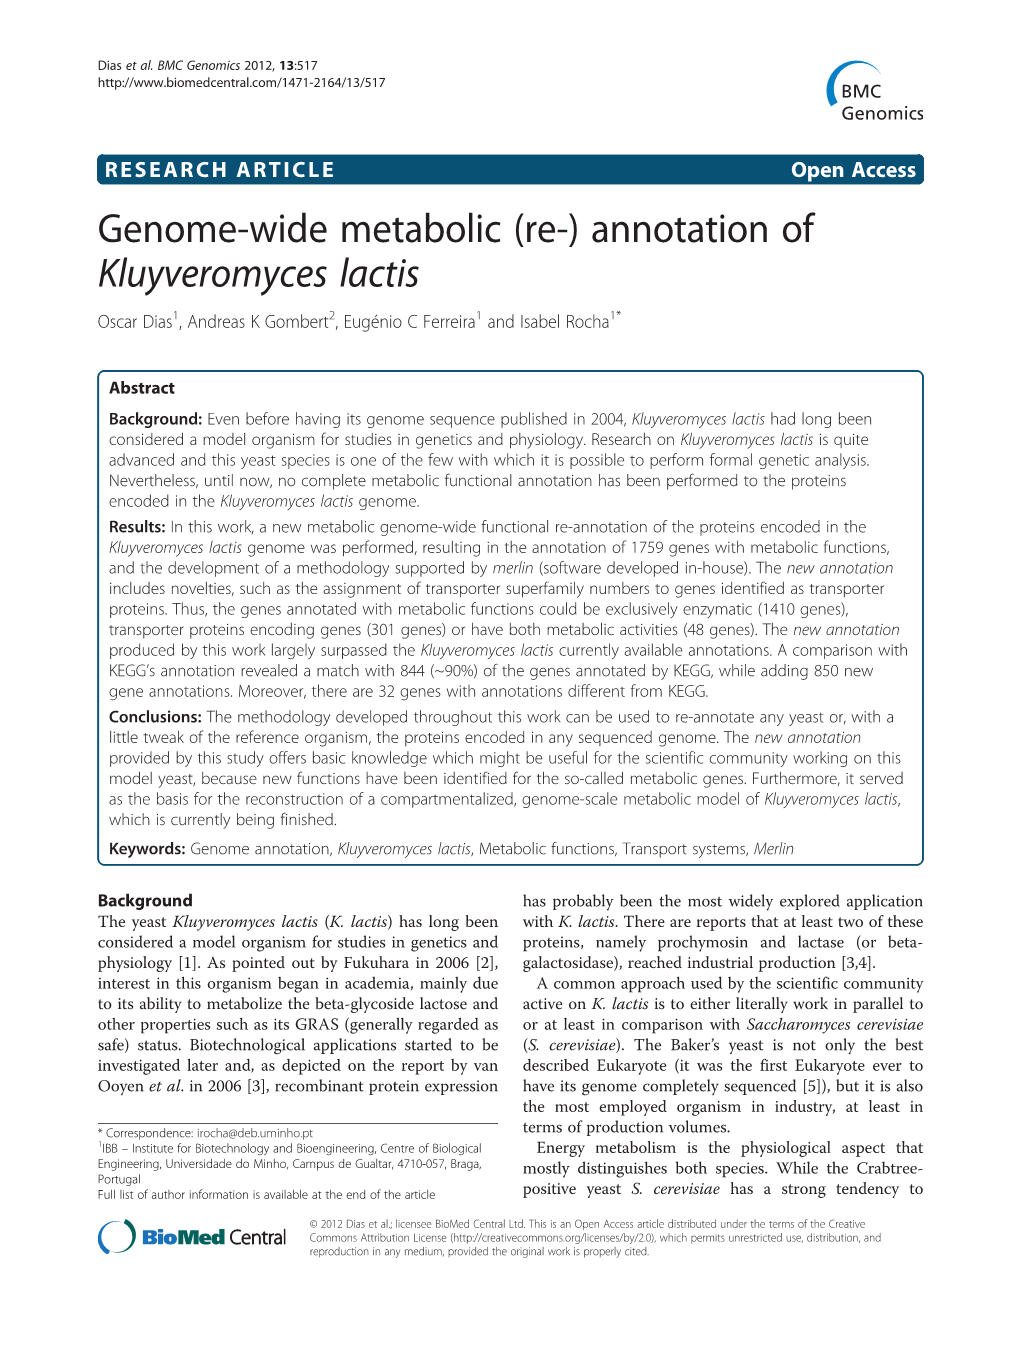 Genome-Wide Metabolic (Re-) Annotation of Kluyveromyces Lactis Oscar Dias1, Andreas K Gombert2, Eugénio C Ferreira1 and Isabel Rocha1*